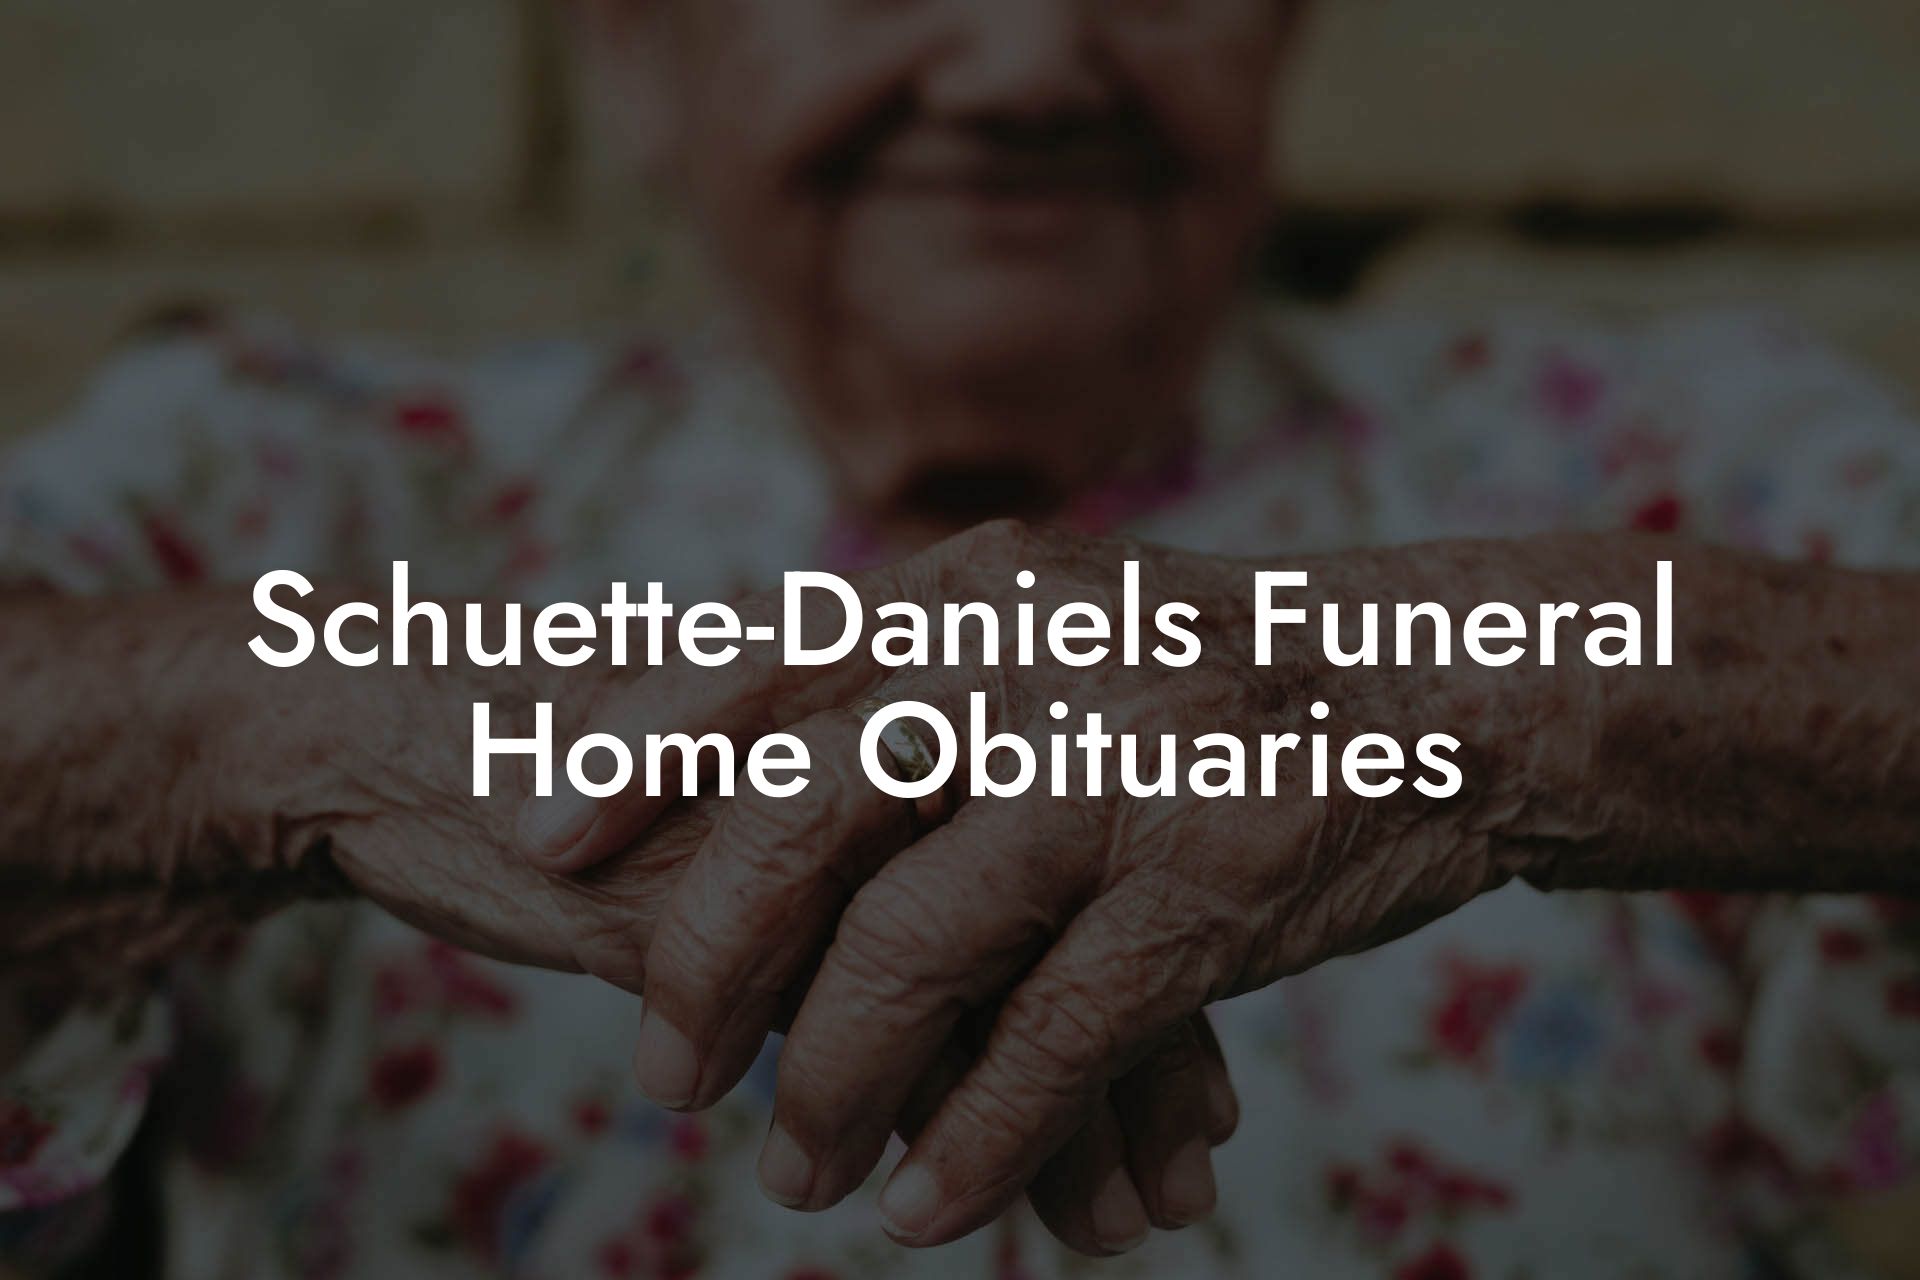 Schuette-Daniels Funeral Home Obituaries